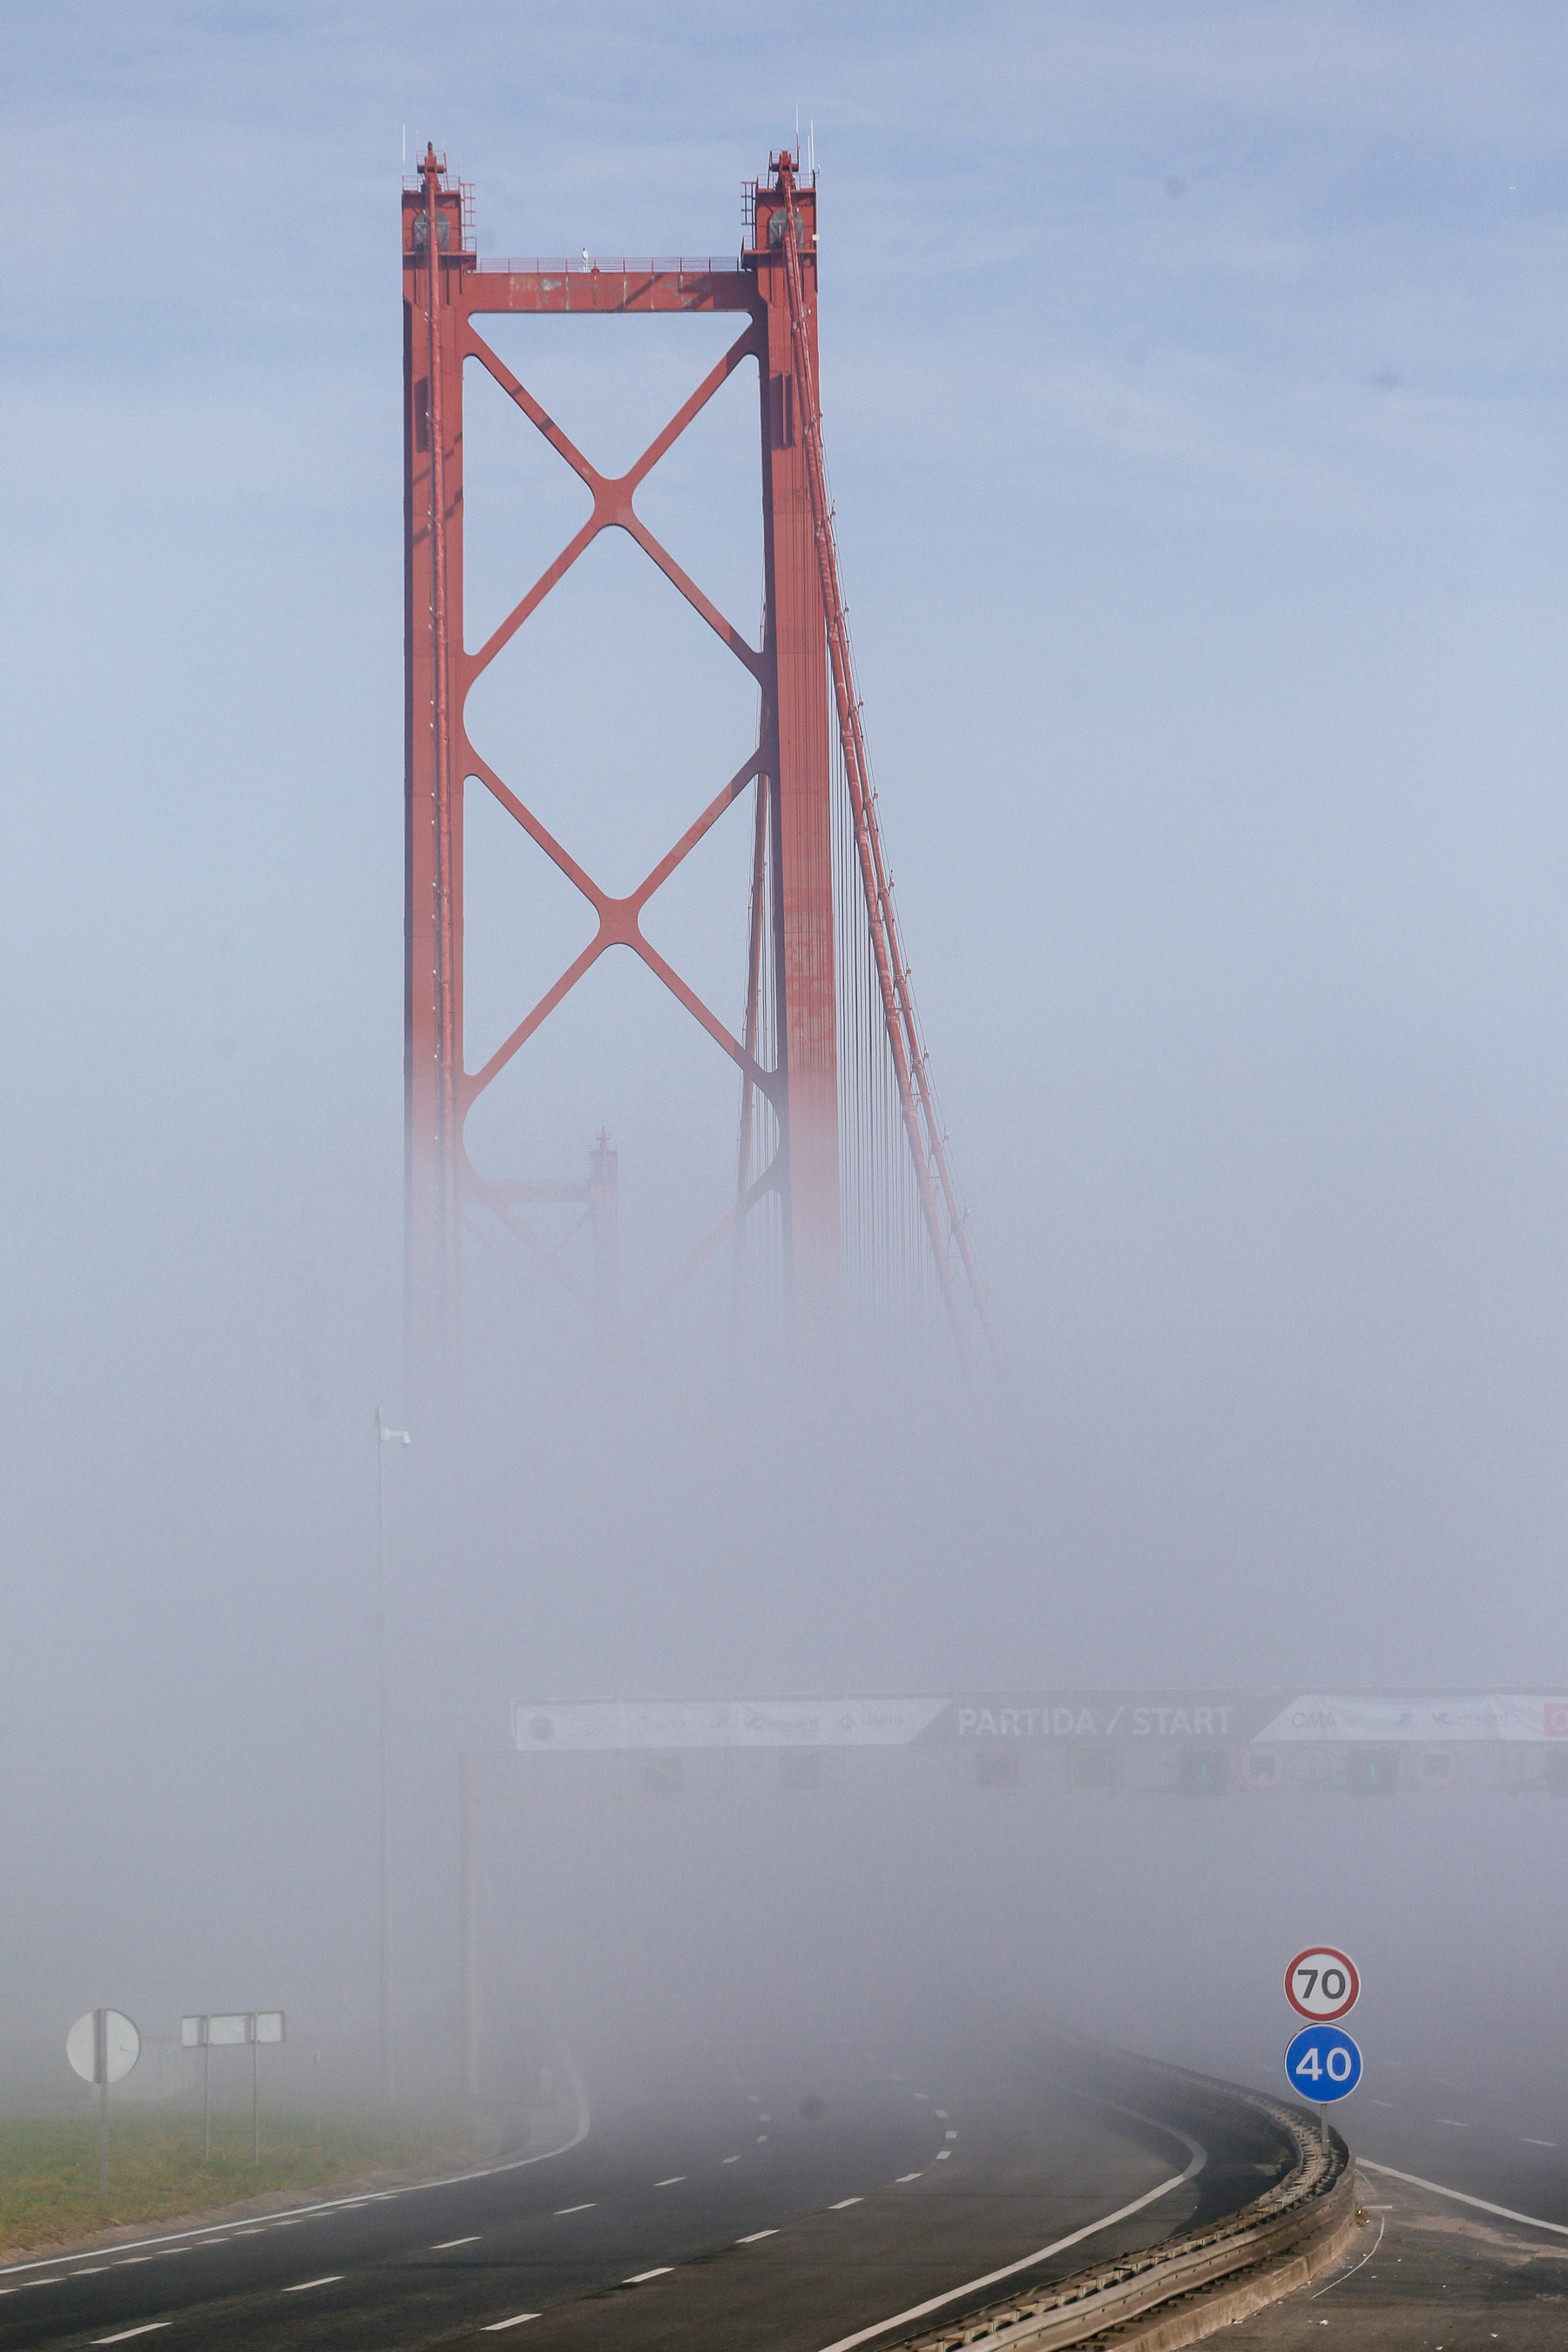 Foggy. A bridge rising out of the fog. 